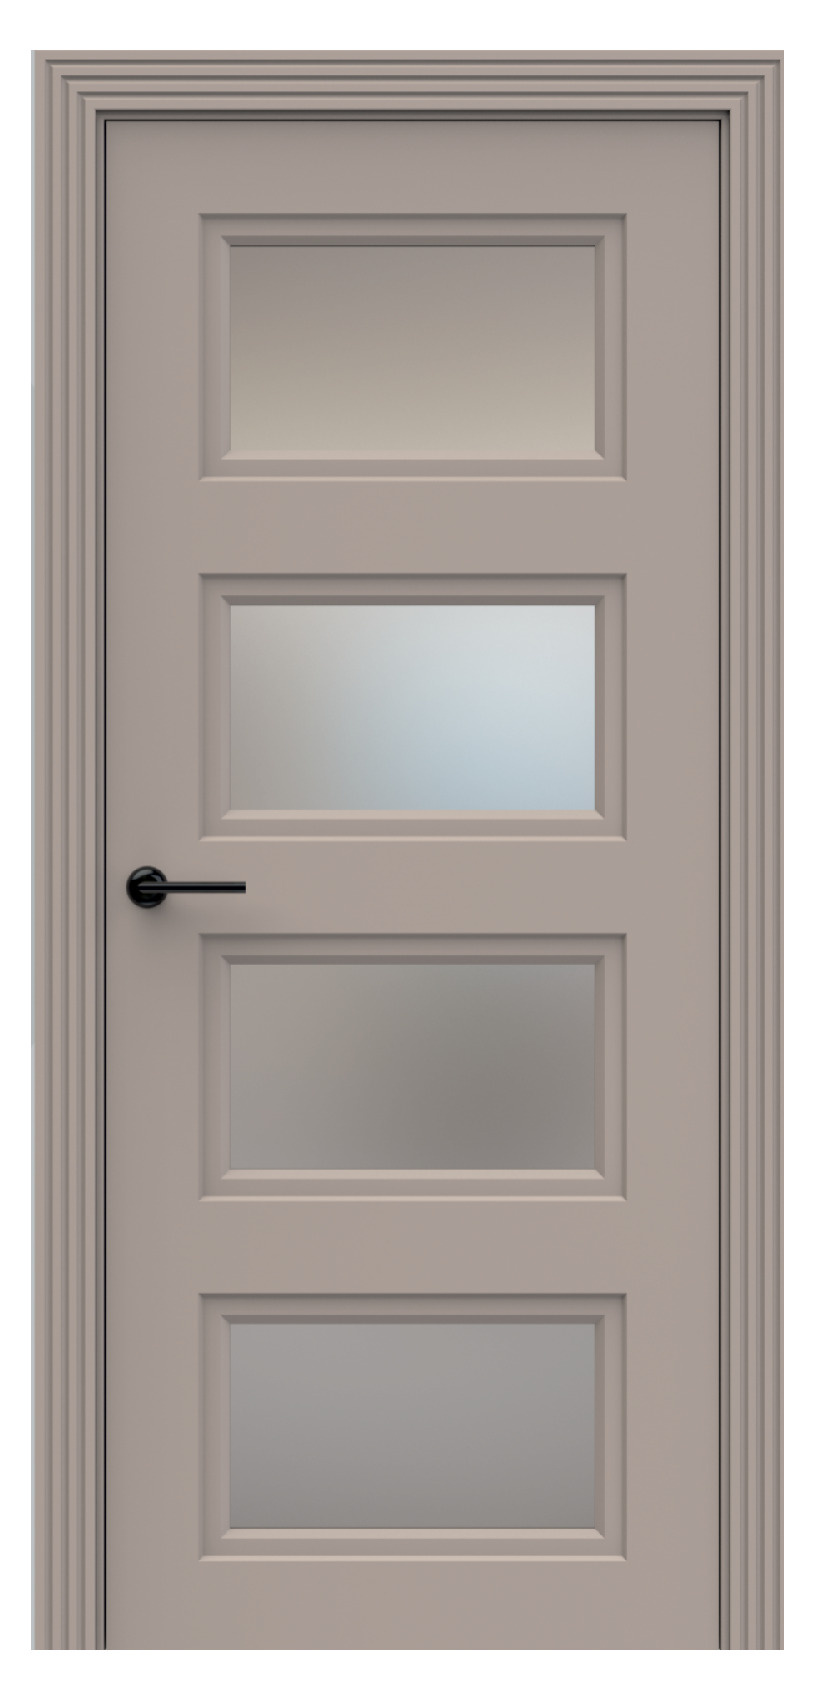 Questdoors Межкомнатная дверь QI12, арт. 17973 - фото №1